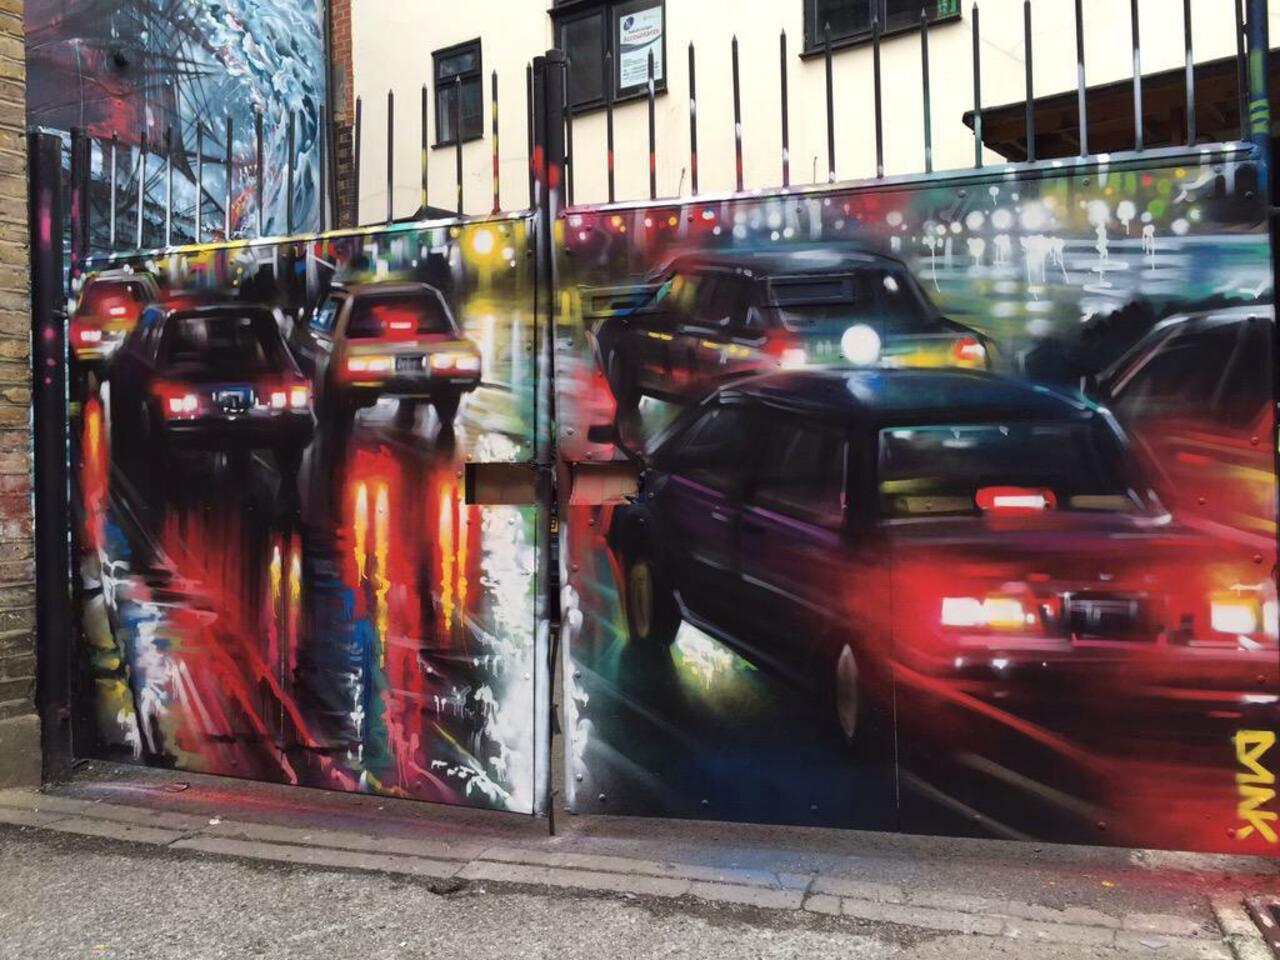 New Street Art by DanKitchener in Brick Lane London 

#art #graffiti #mural #streetart http://t.co/JLDWUYd2Kj